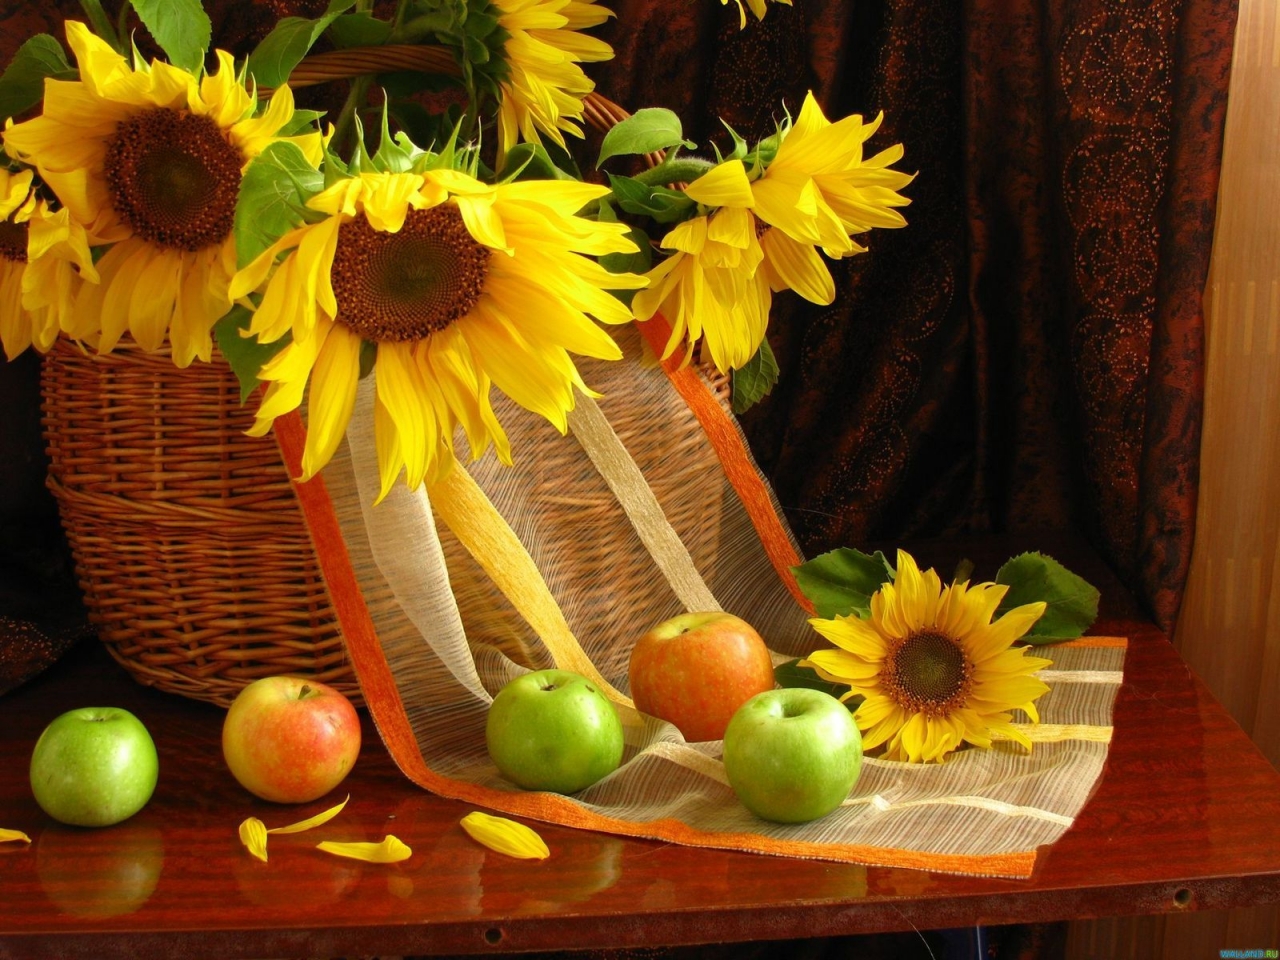 Lovely Sun Flowers for 1280 x 960 resolution